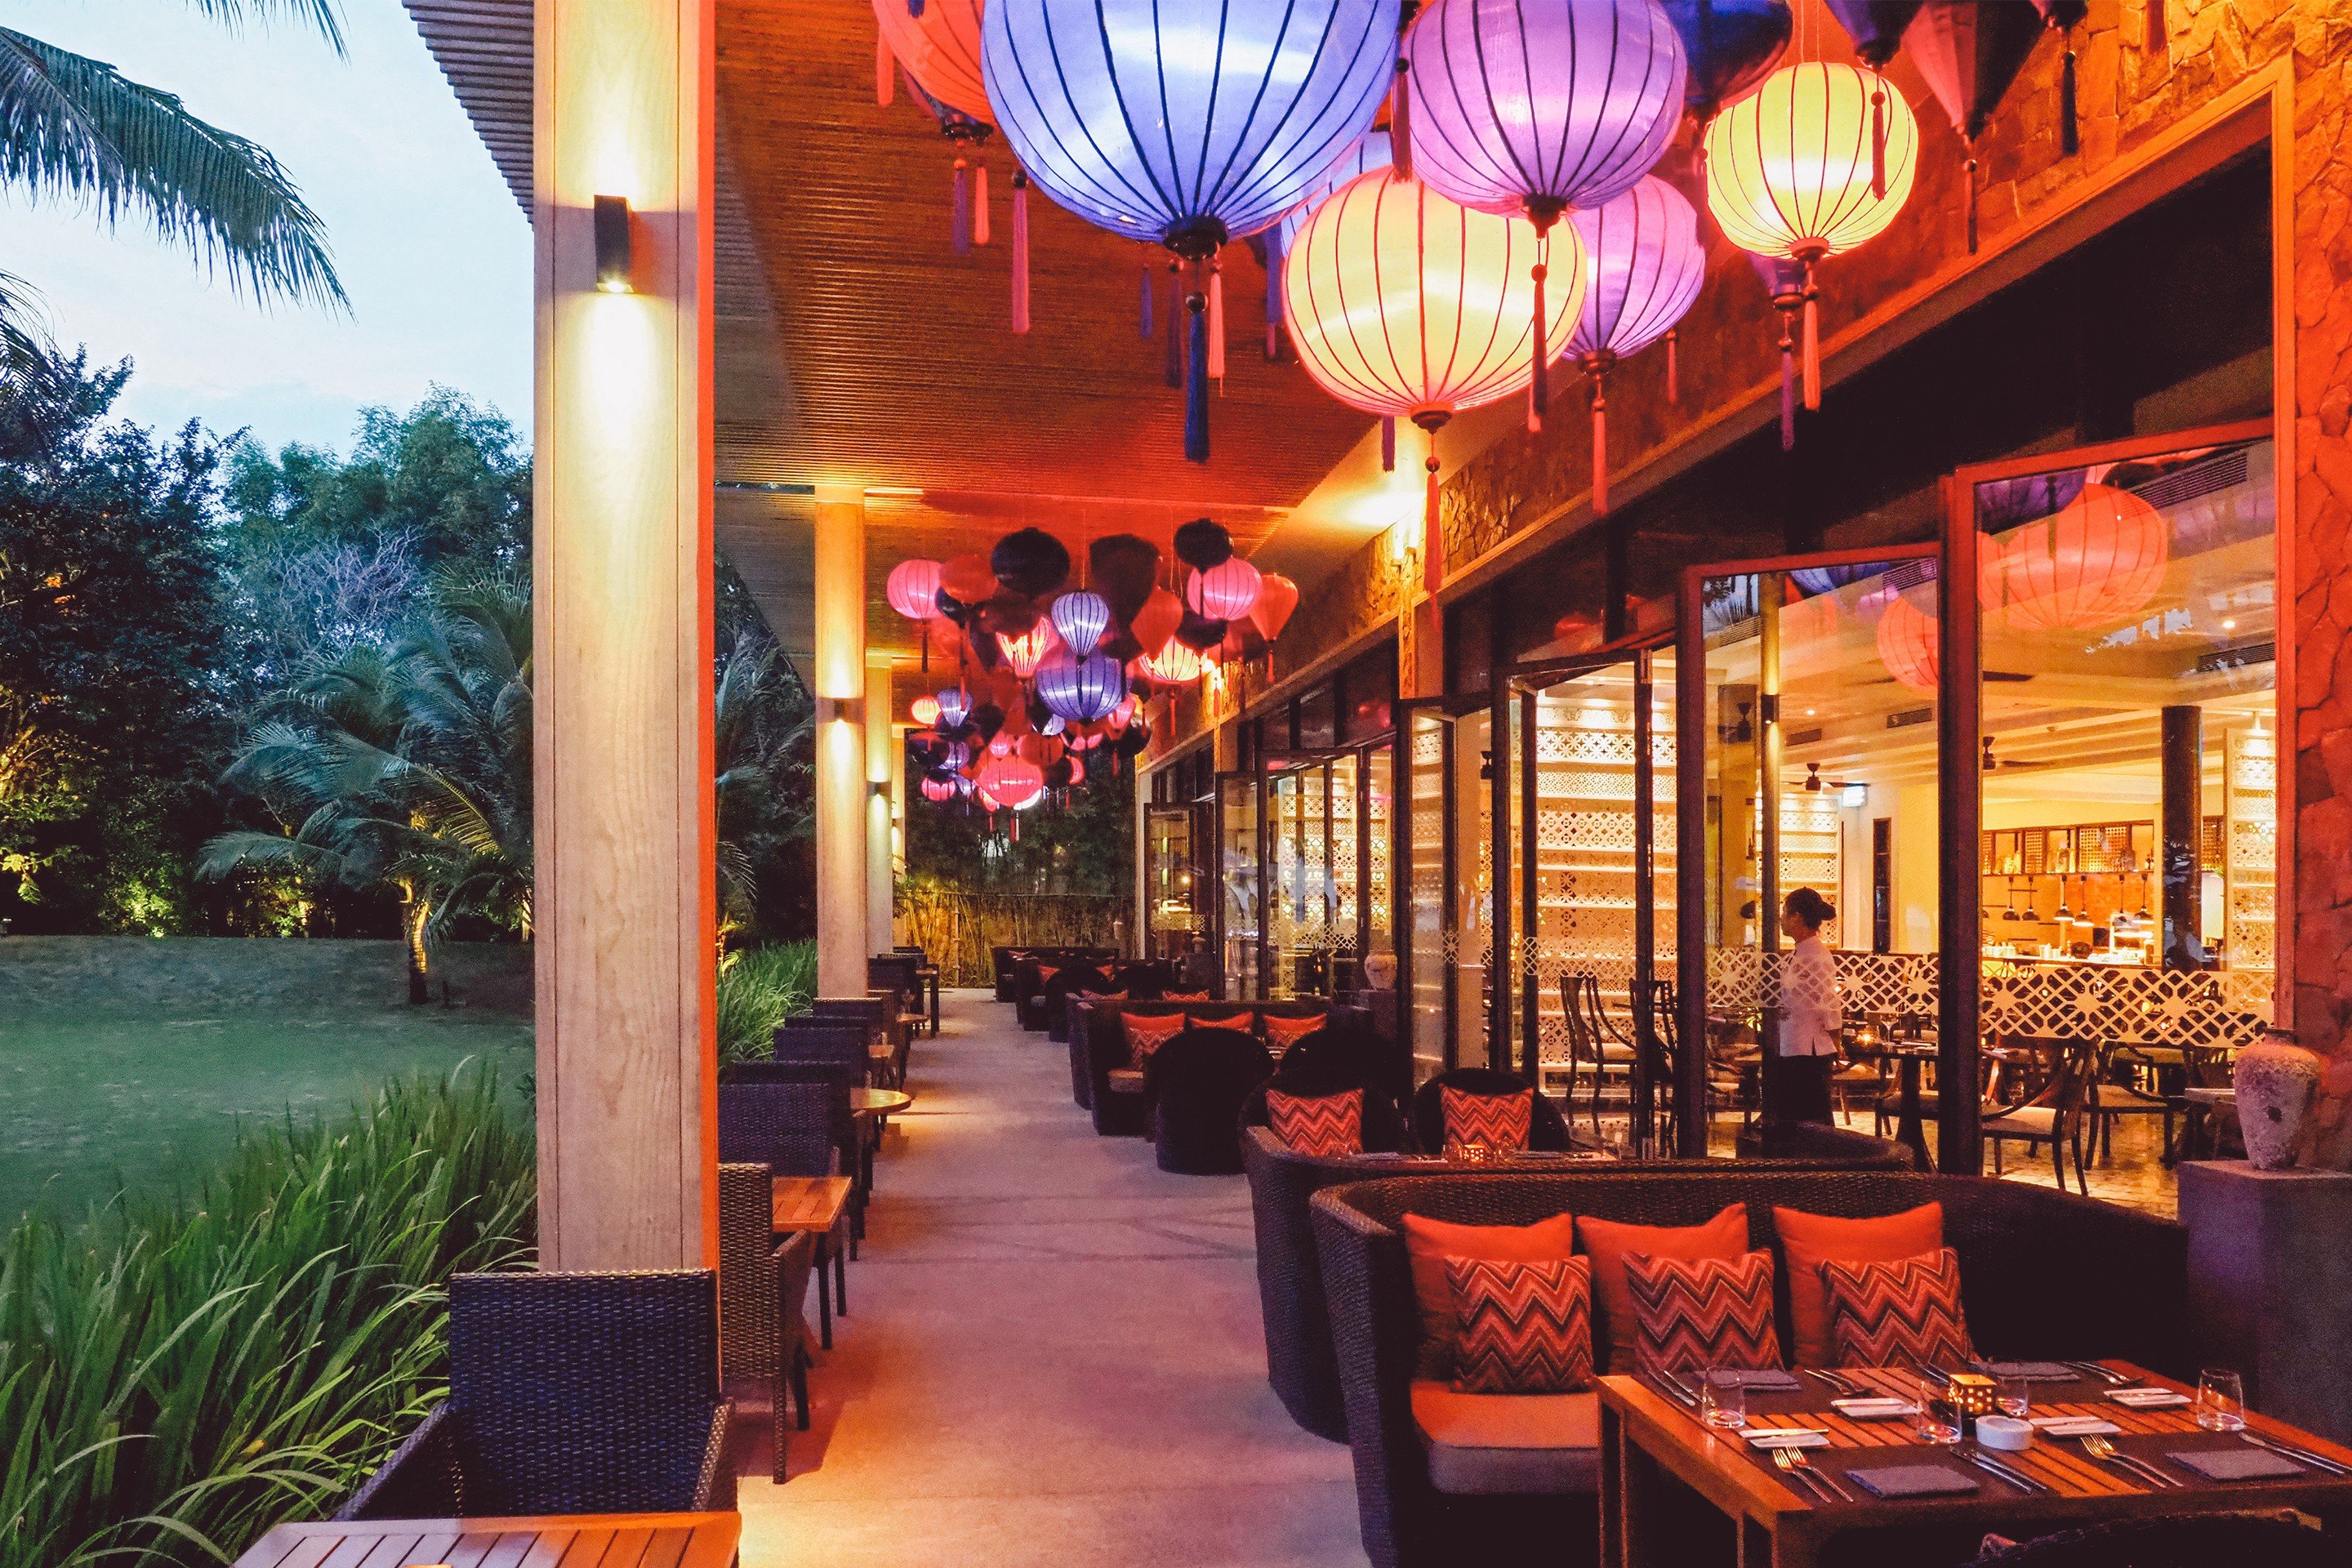 The Salinda Restaurant blends local cuisine and culture at Salinda Resort Phu Quoc Island, in southern Vietnam.